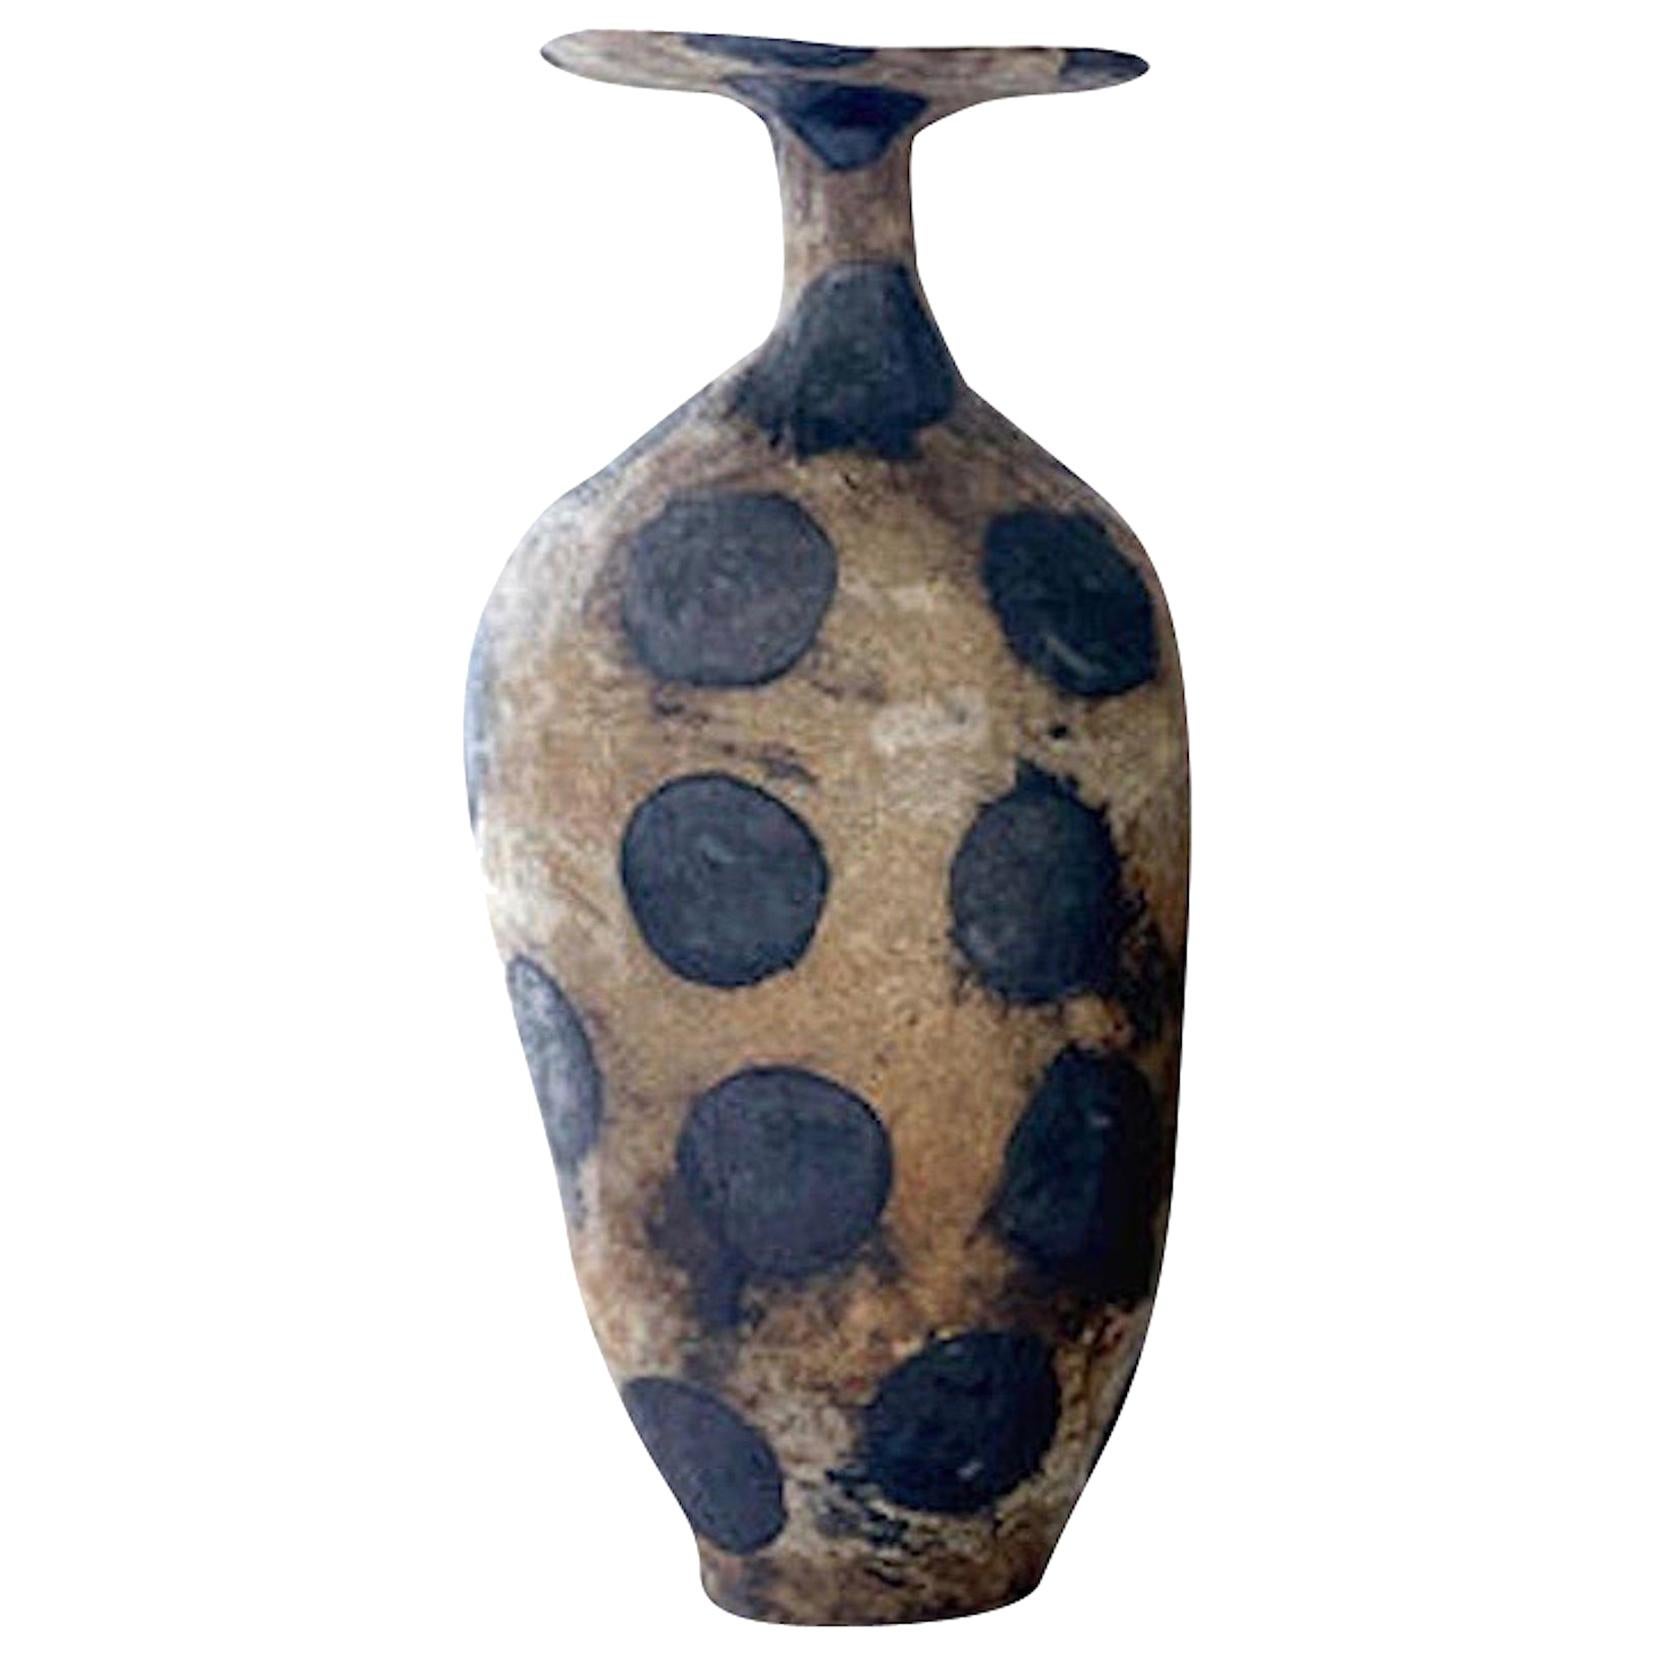 Large Black Polka Dot Vase By Brenda Holzke, USA, Contemporary